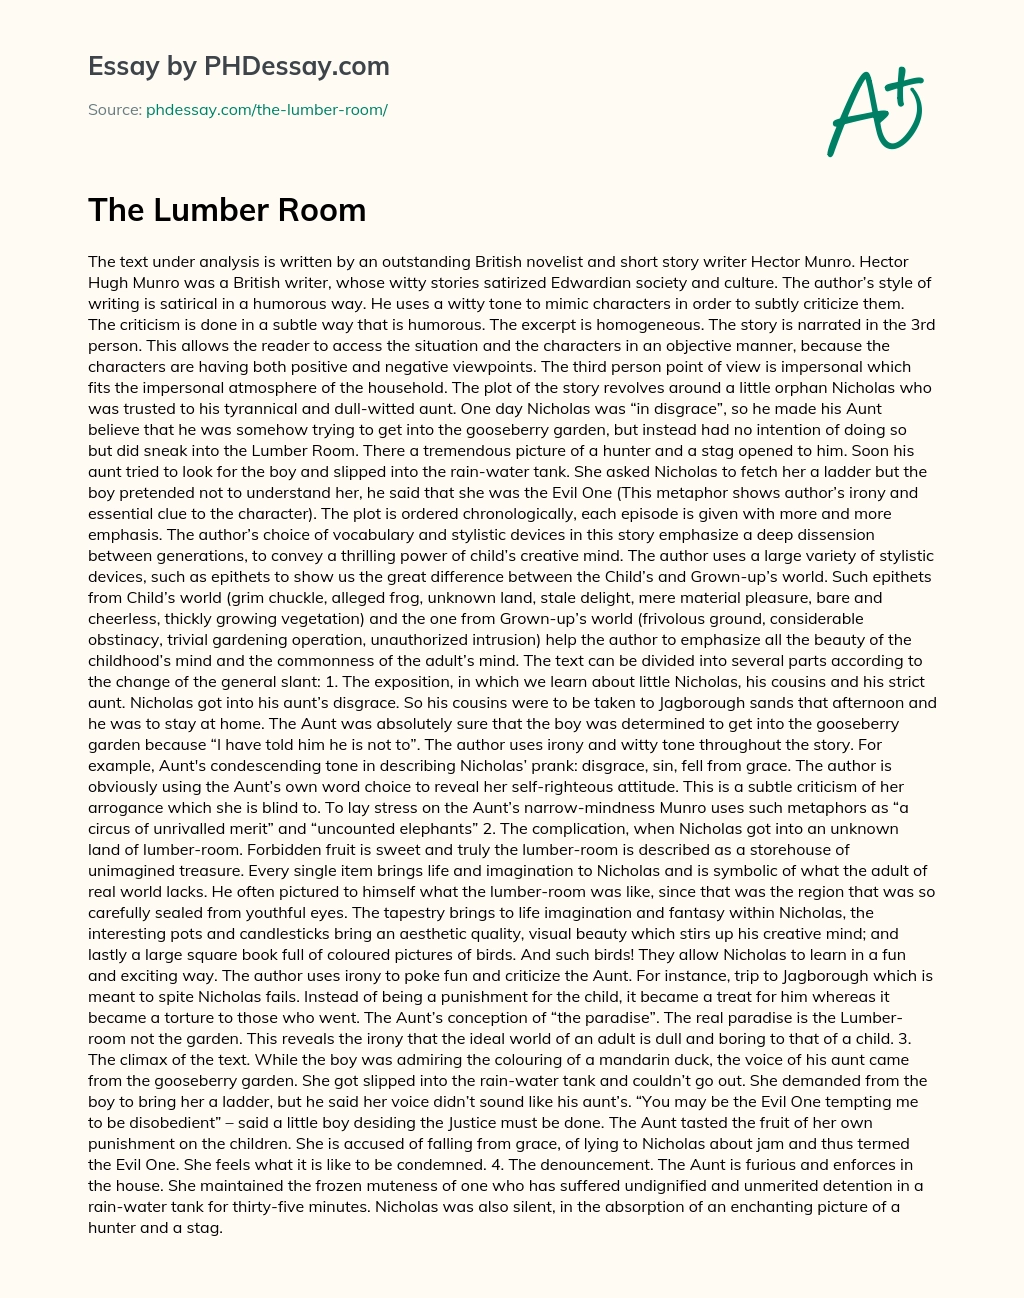 The Lumber Room essay